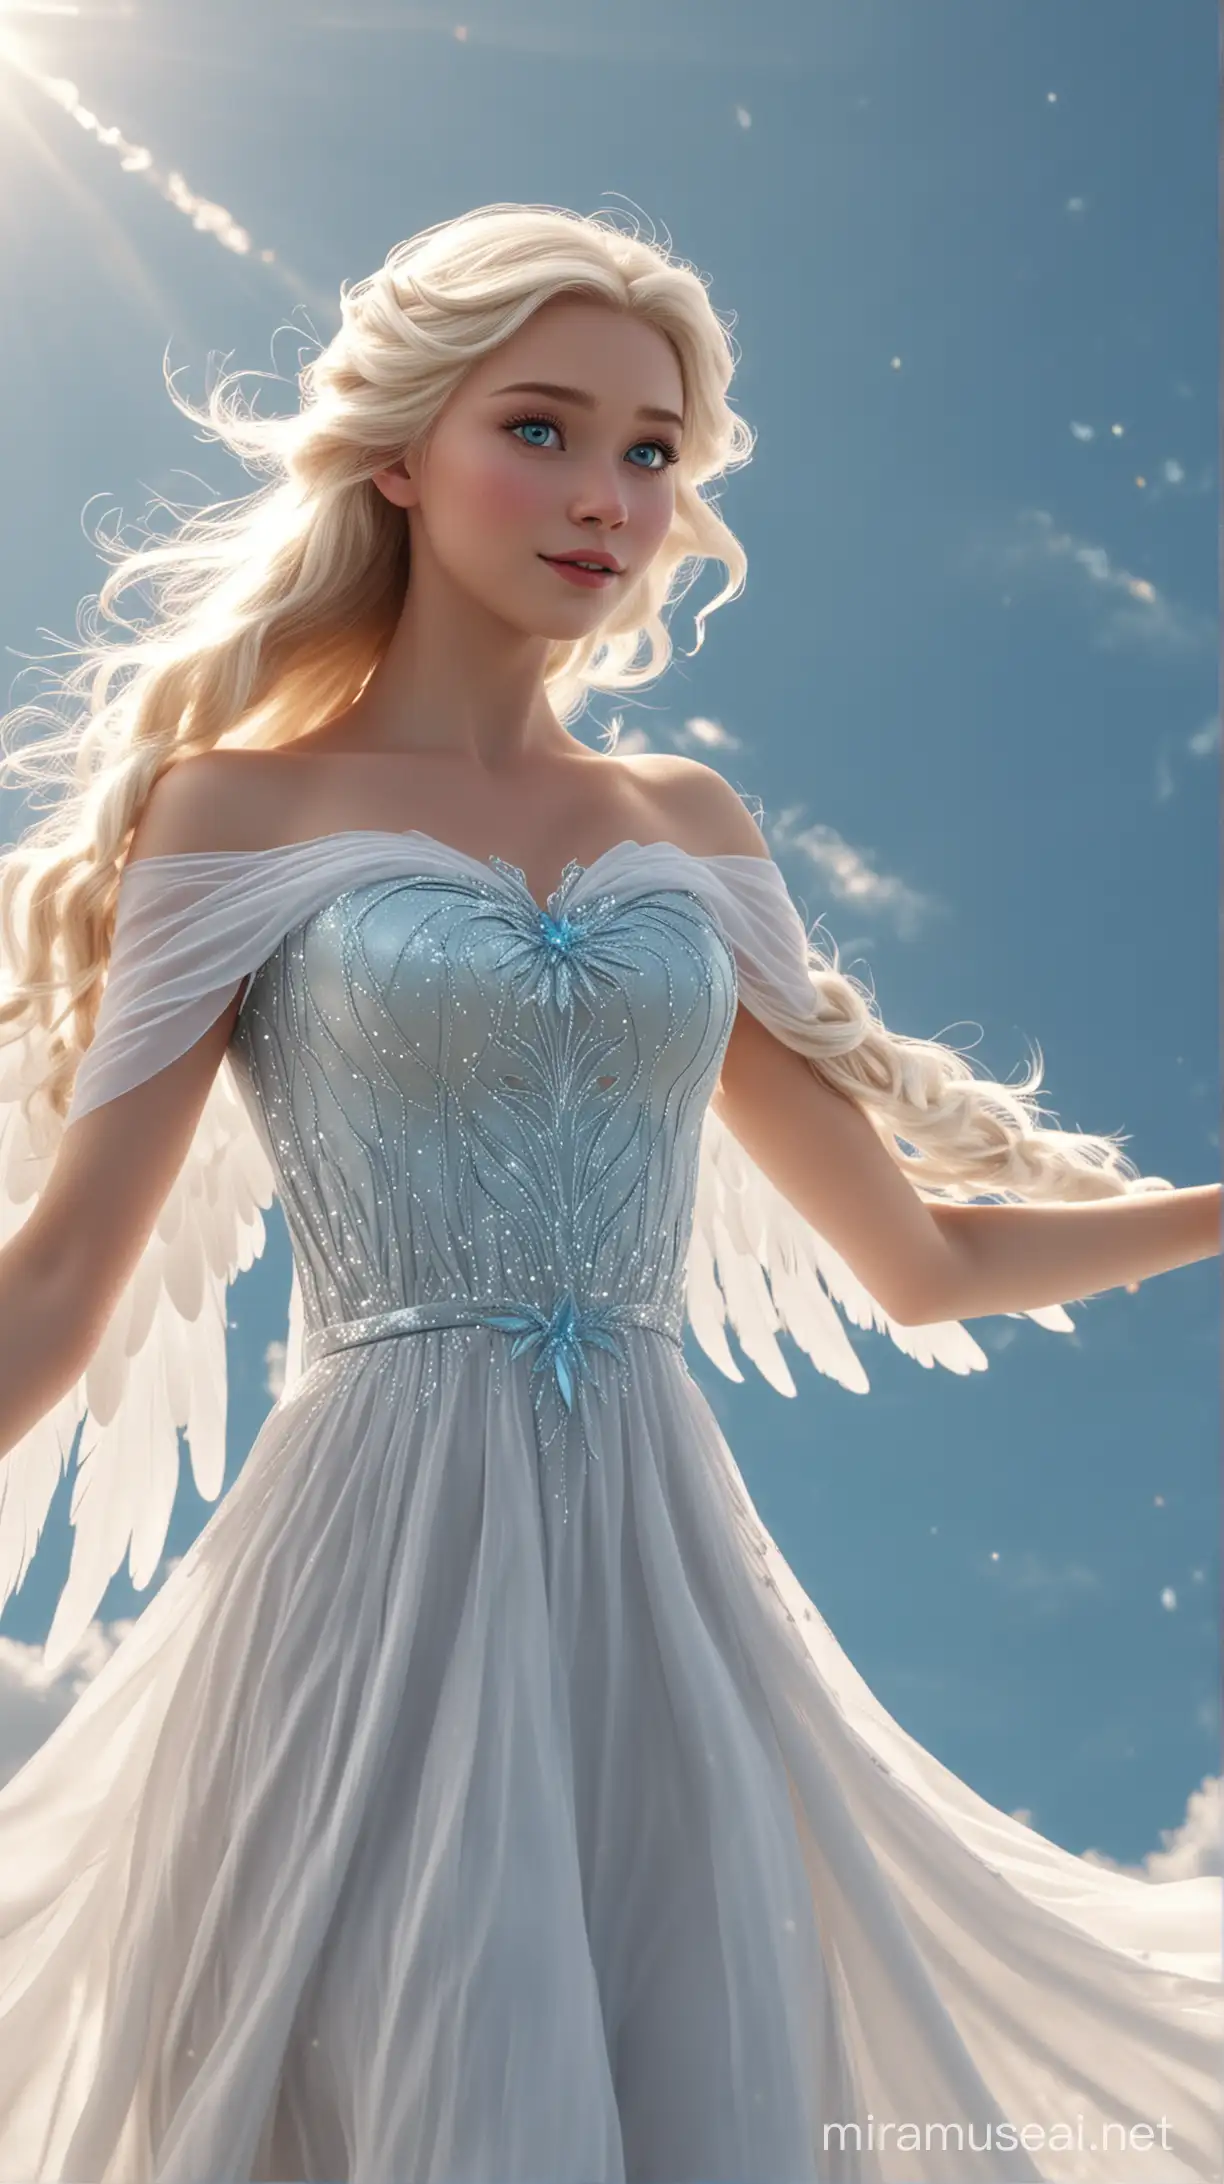 Ethereal Flight of Angelic Elsa Celestial Scene with Disney Princess